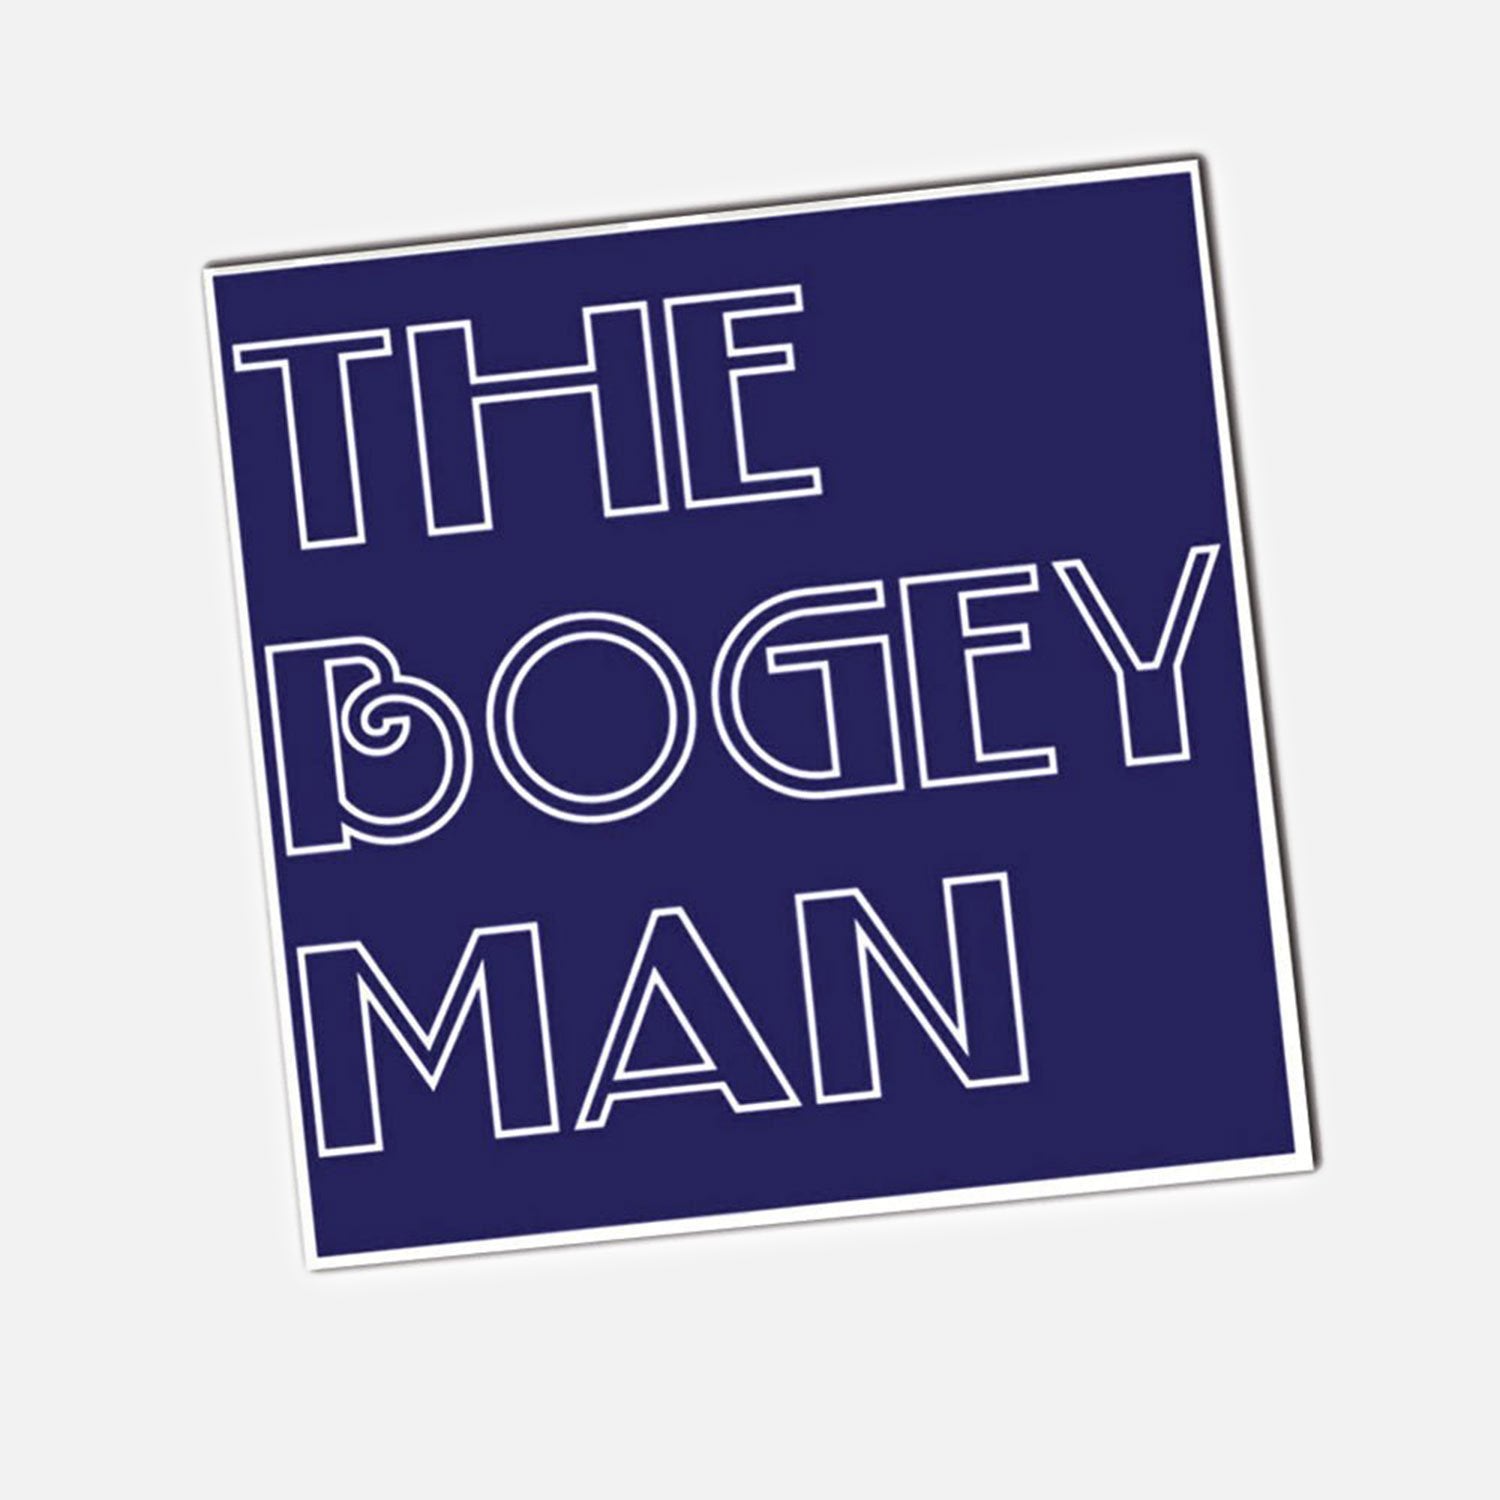 Bogey Man Sticker - F. King Golf